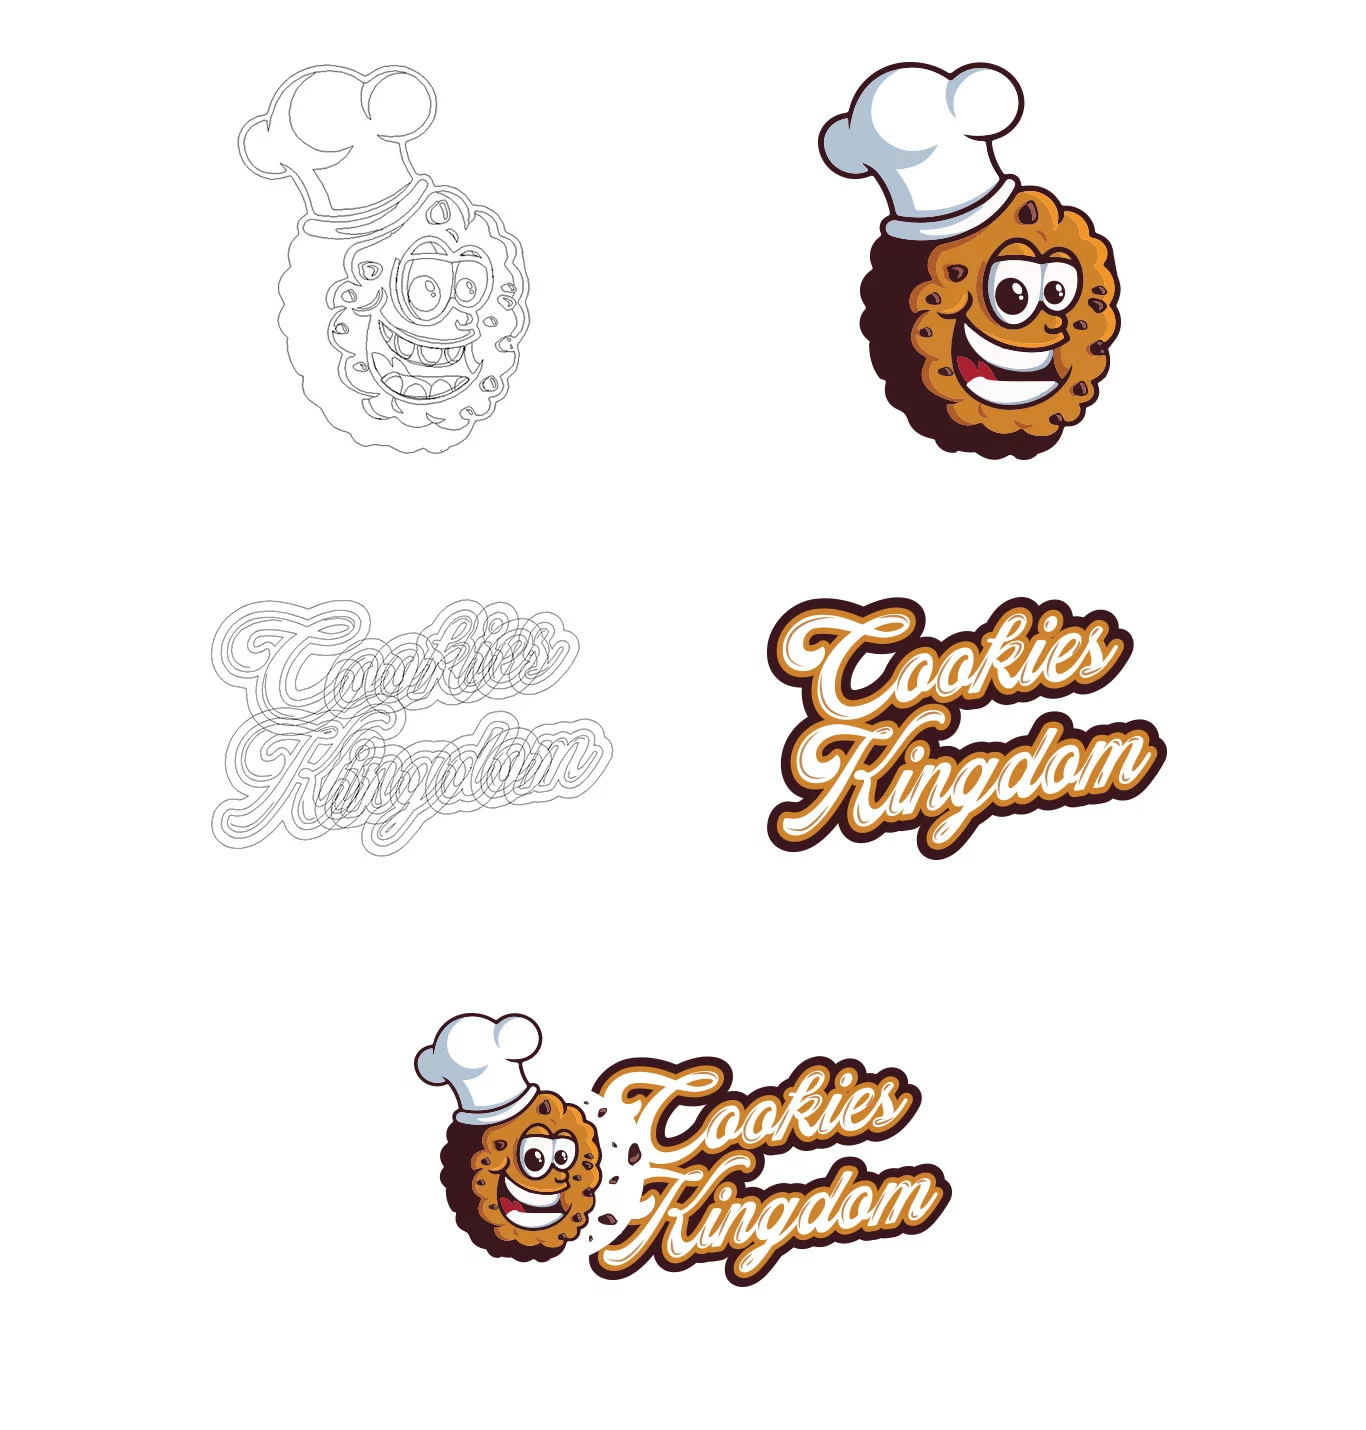 Go Up - Cookies Kingdom Logo Design Concepts